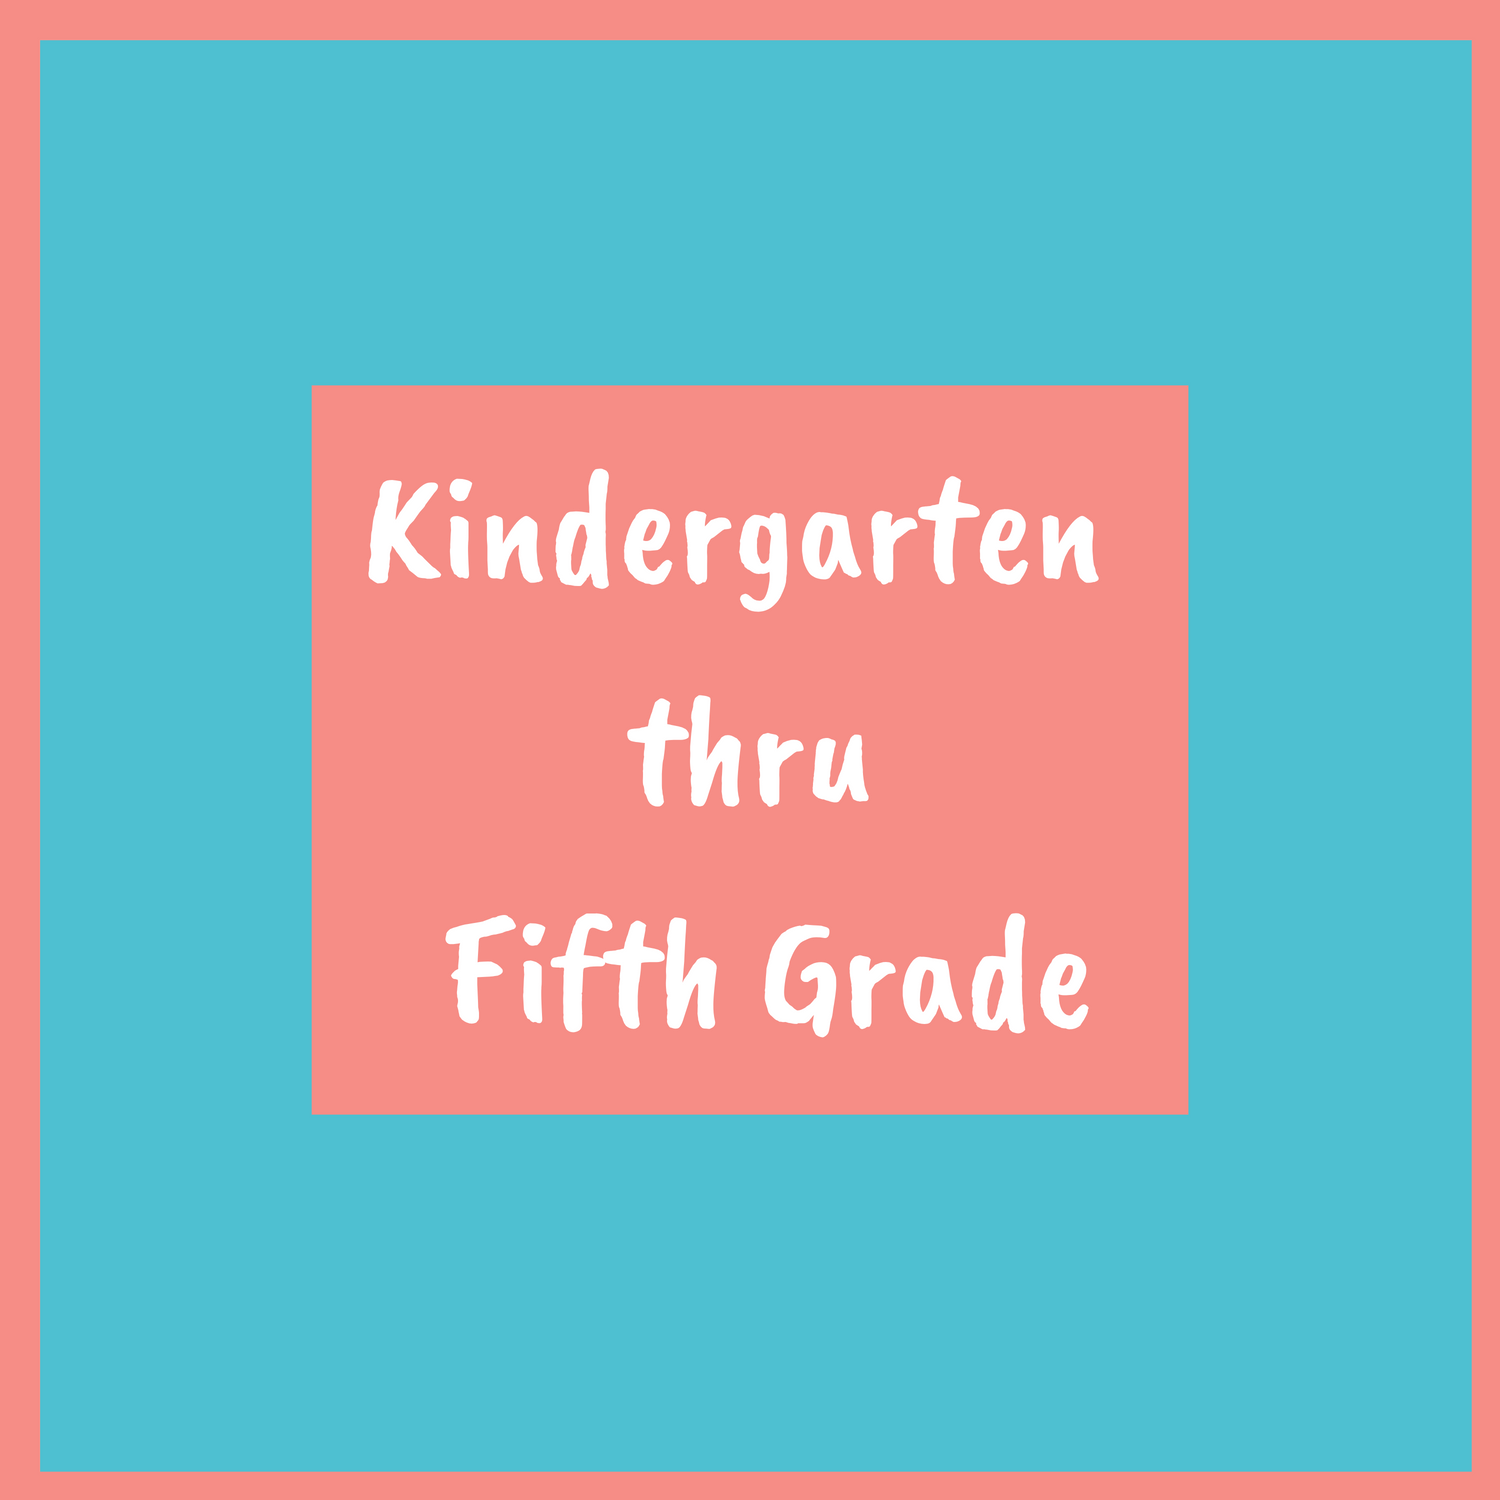 Kindergarten thru Fifth Grade